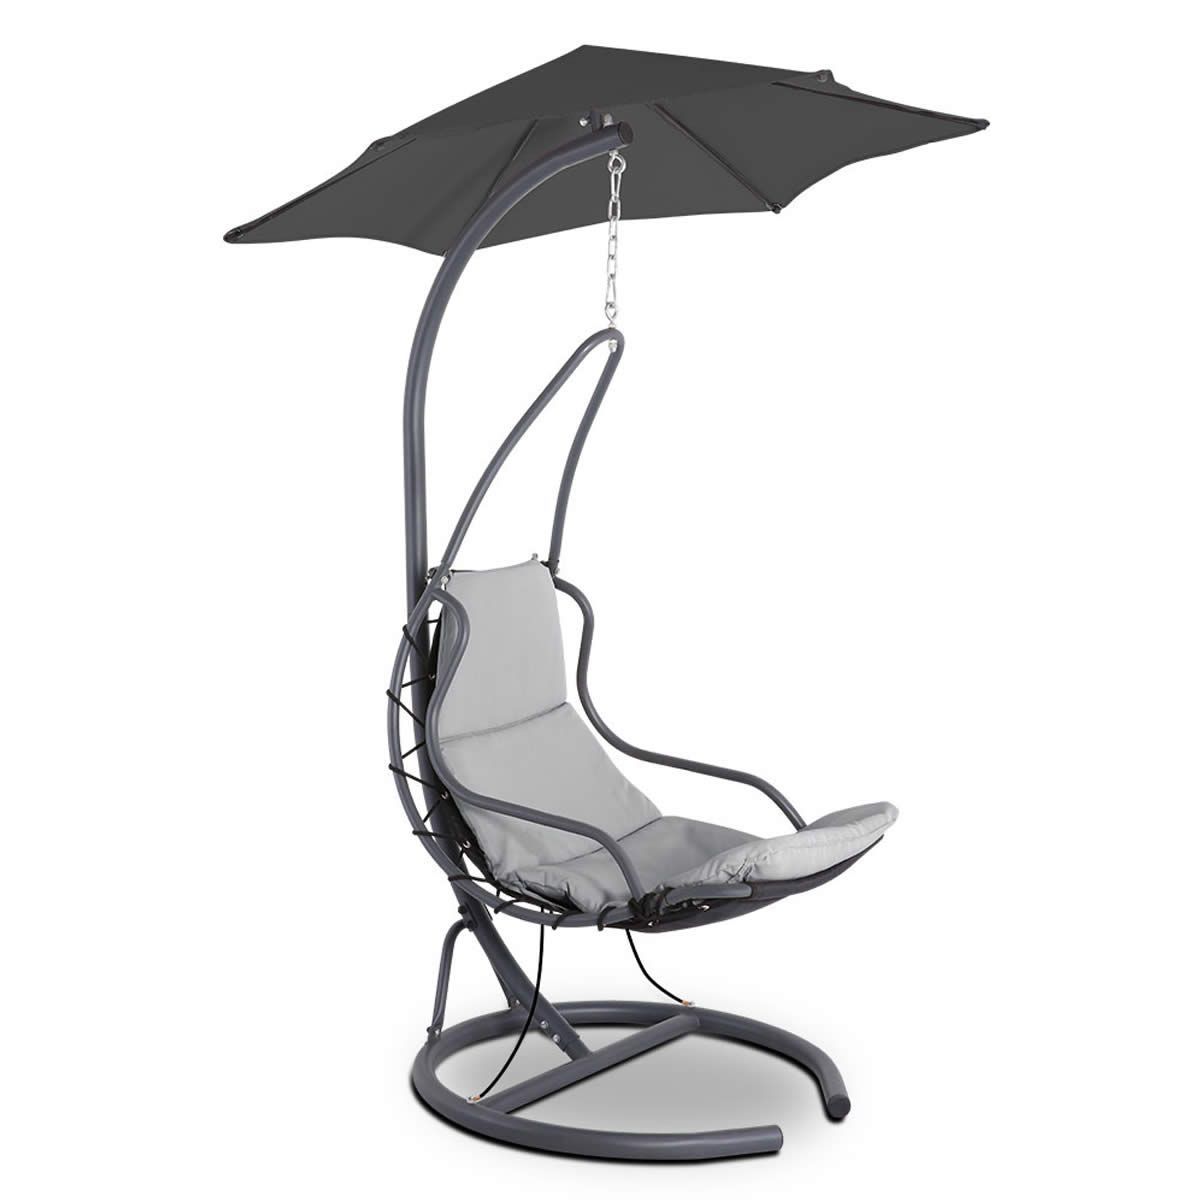 Outdoor Swing Hammock Chair with Cushion - Grey